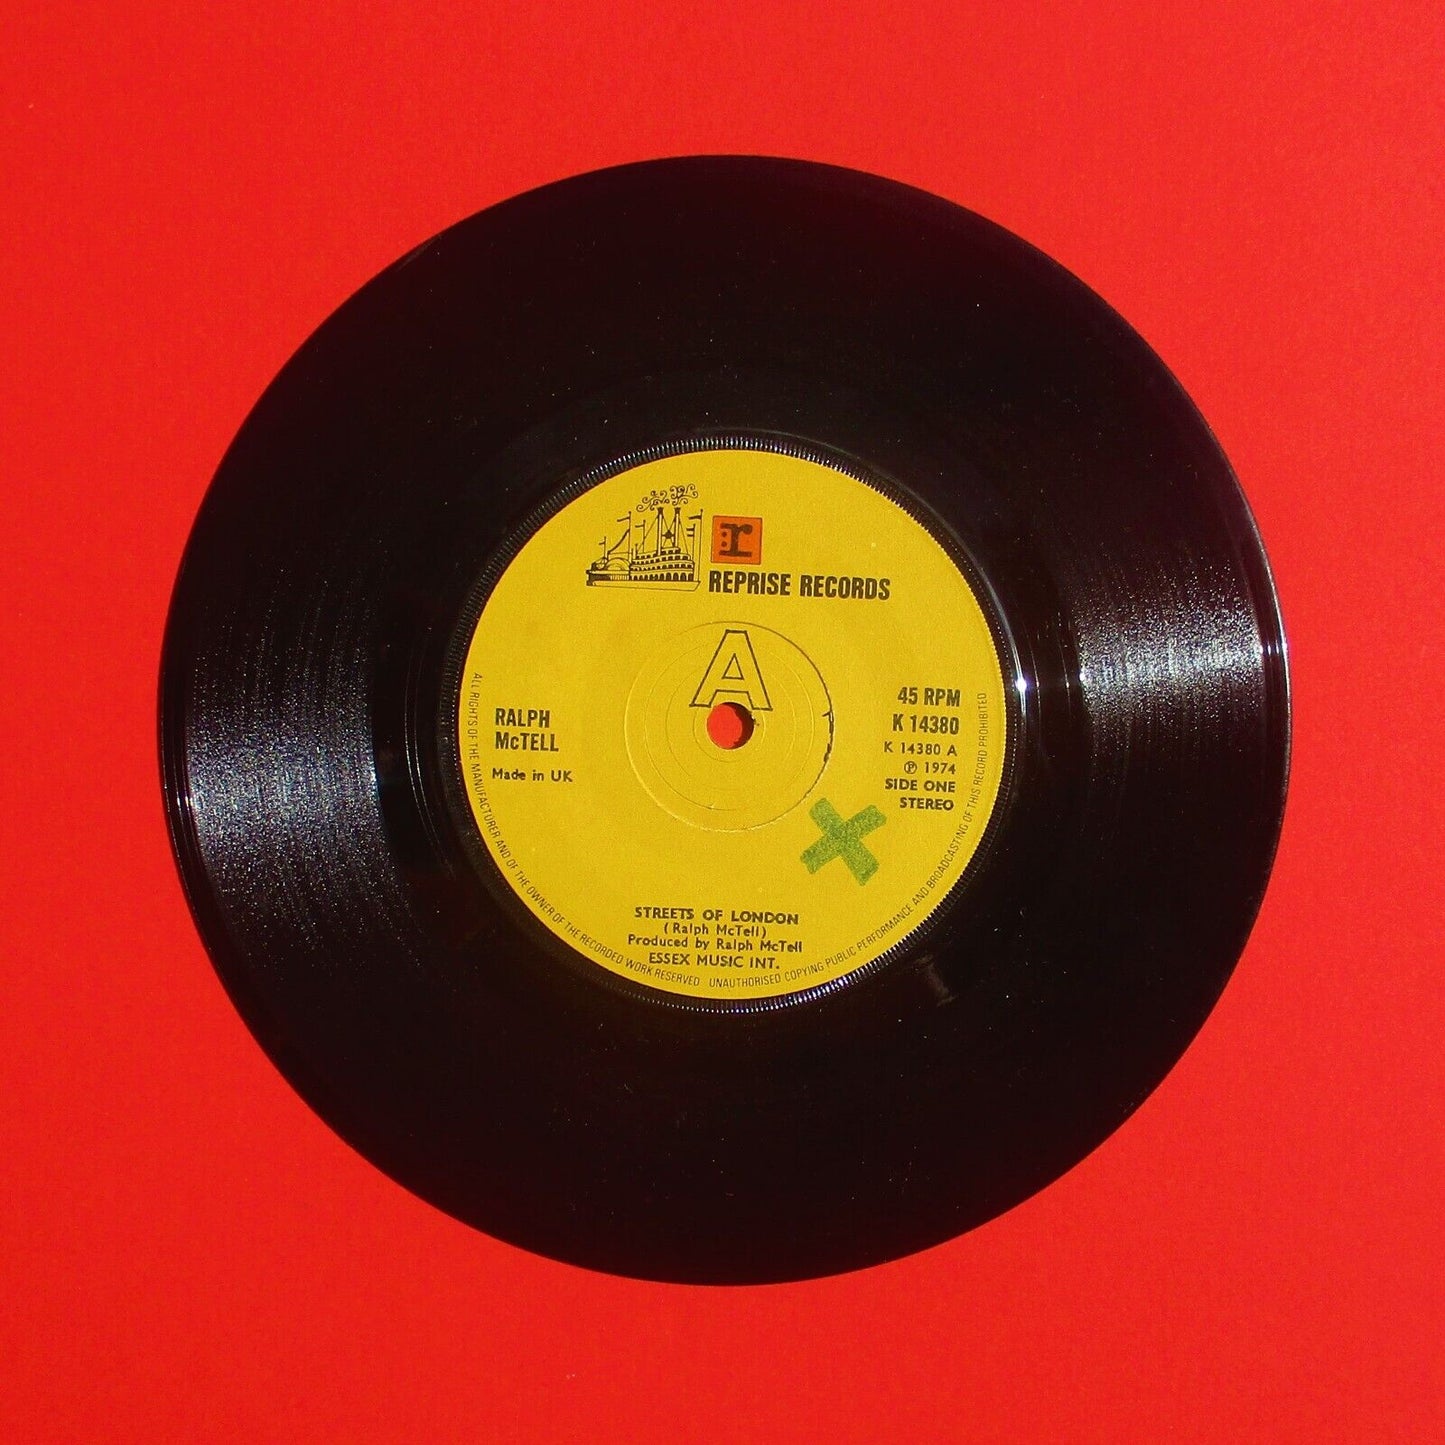 Ralph McTell ‎Streets Of London / Summer Lightn Vinyl 7" Single 1974 UK Pressing